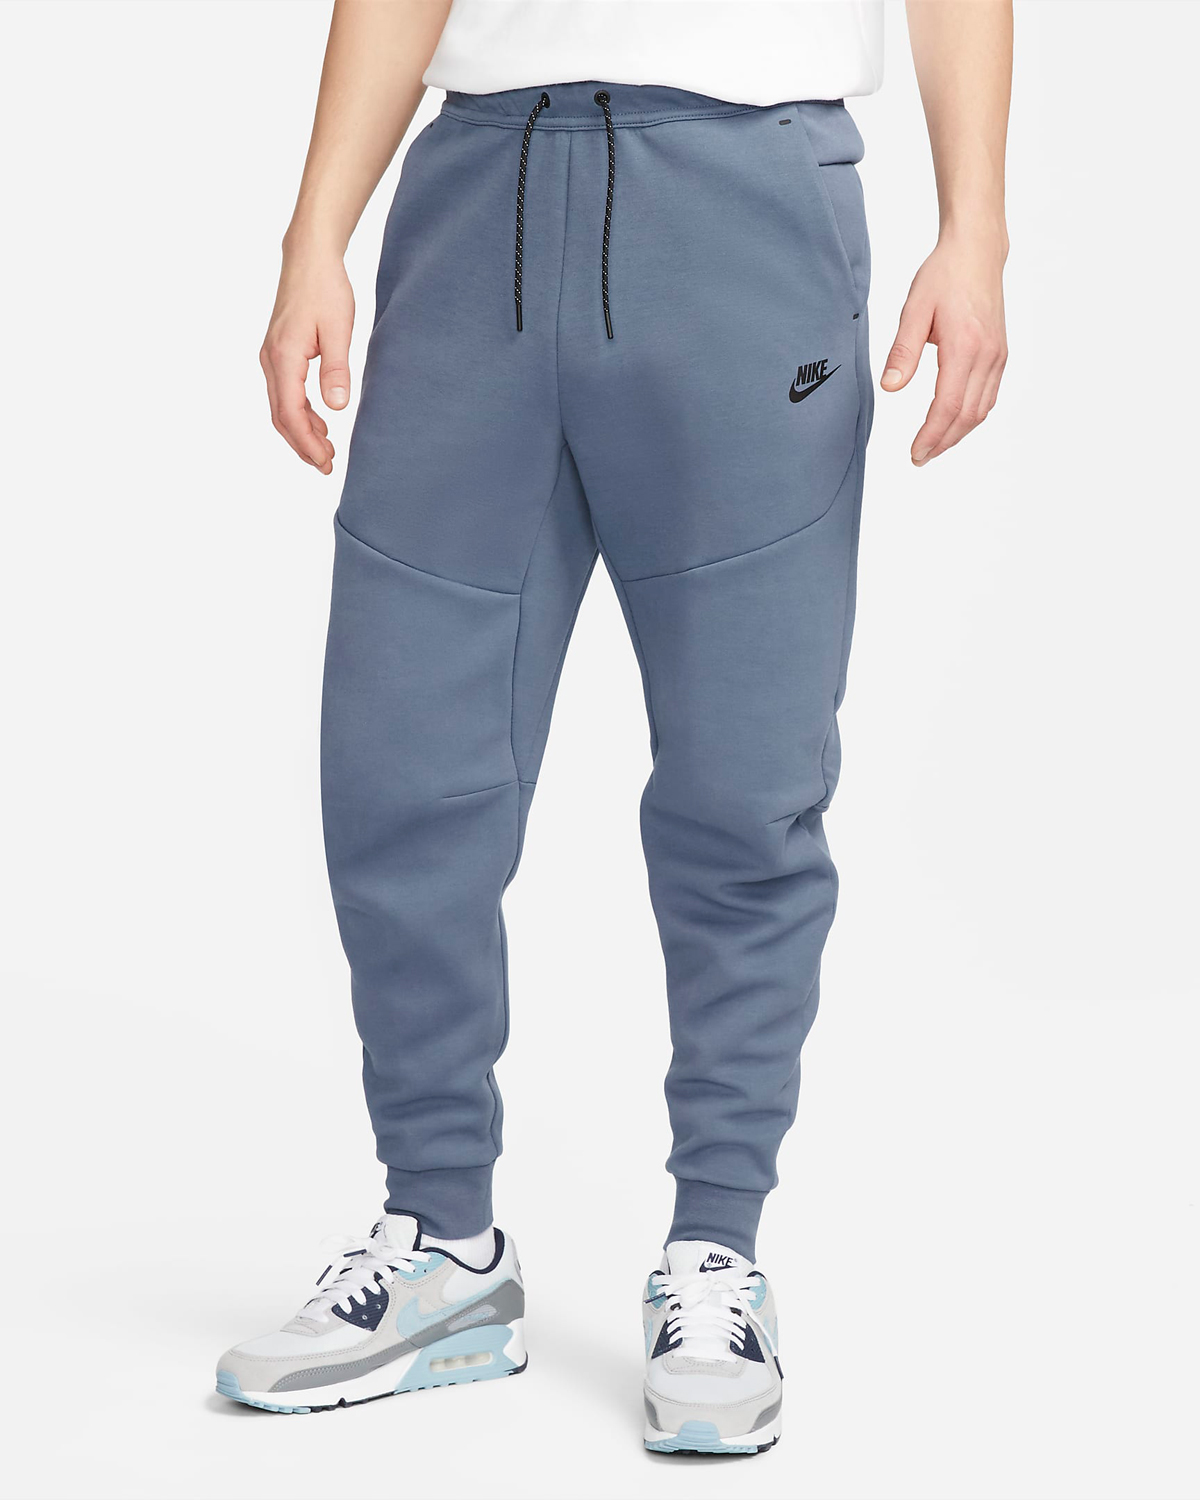 Nike-Tech-Fleece-Joggers-Diffused-Blue